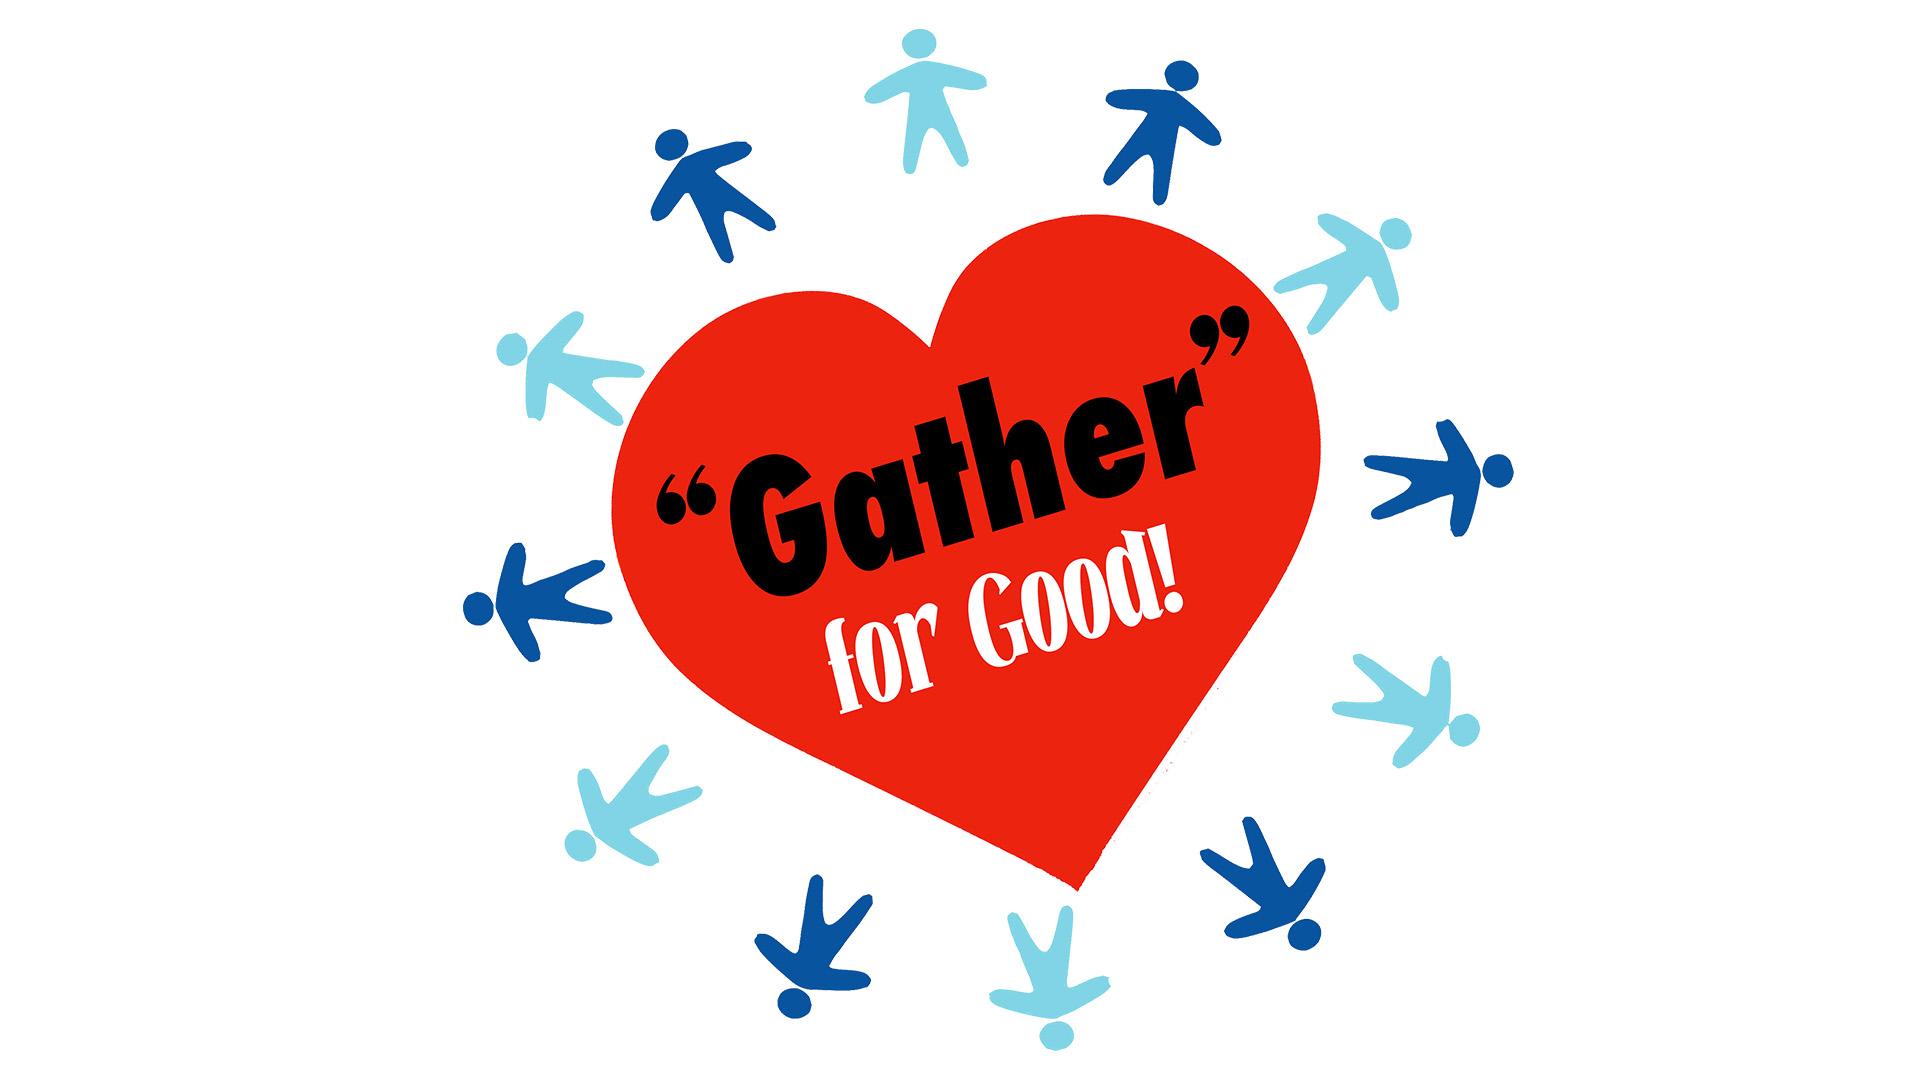 "Gather" for Good logo